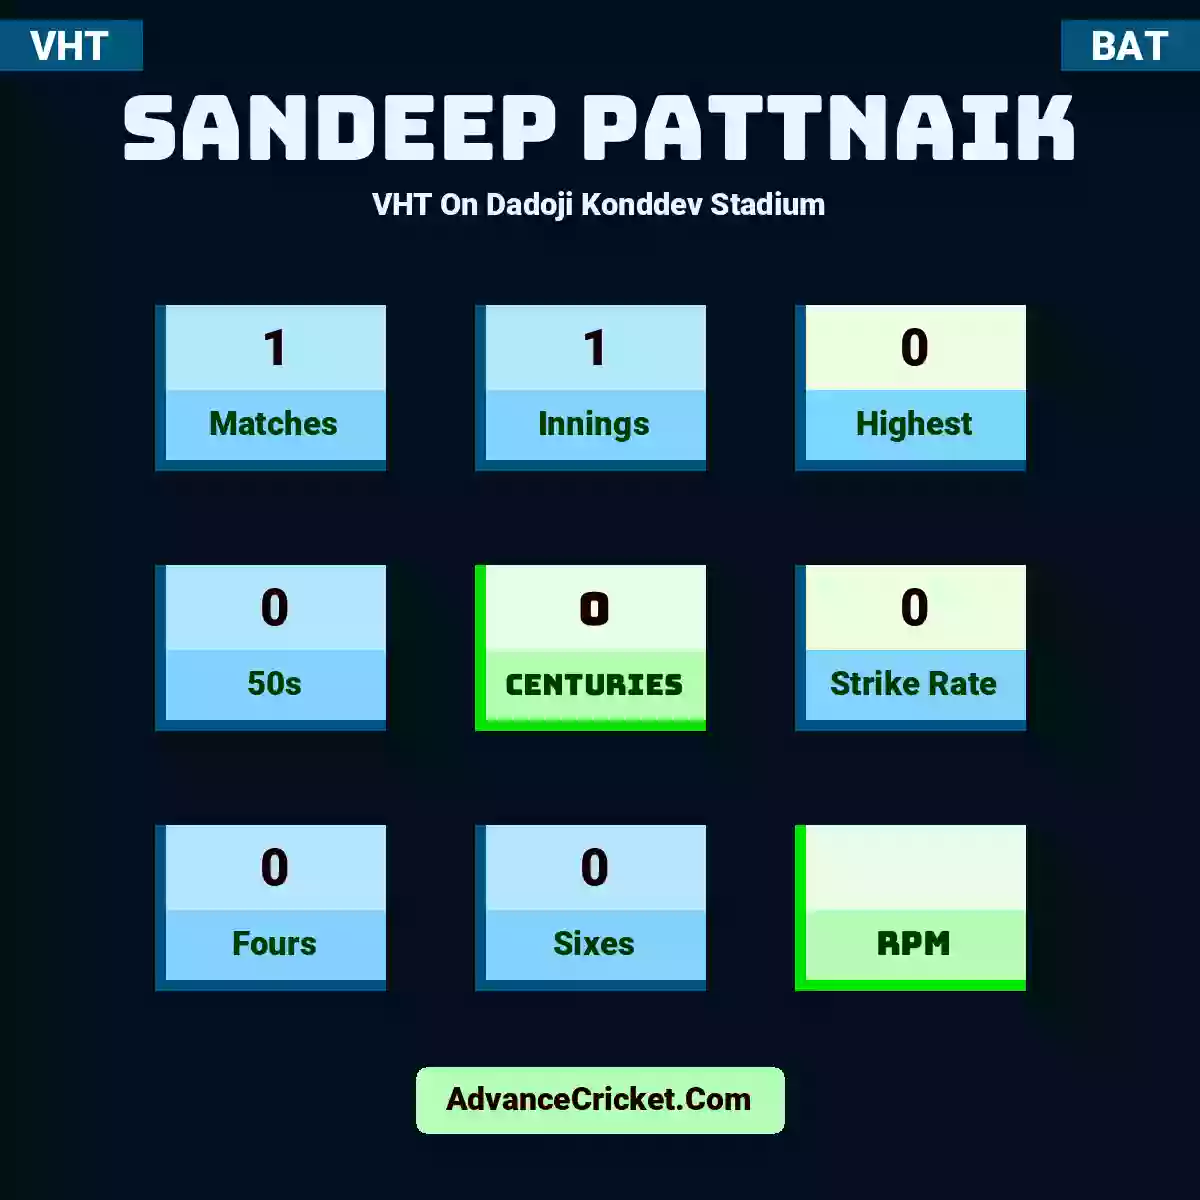 Sandeep Pattnaik VHT  On Dadoji Konddev Stadium, Sandeep Pattnaik played 1 matches, scored 0 runs as highest, 0 half-centuries, and 0 centuries, with a strike rate of 0. S.Pattnaik hit 0 fours and 0 sixes.